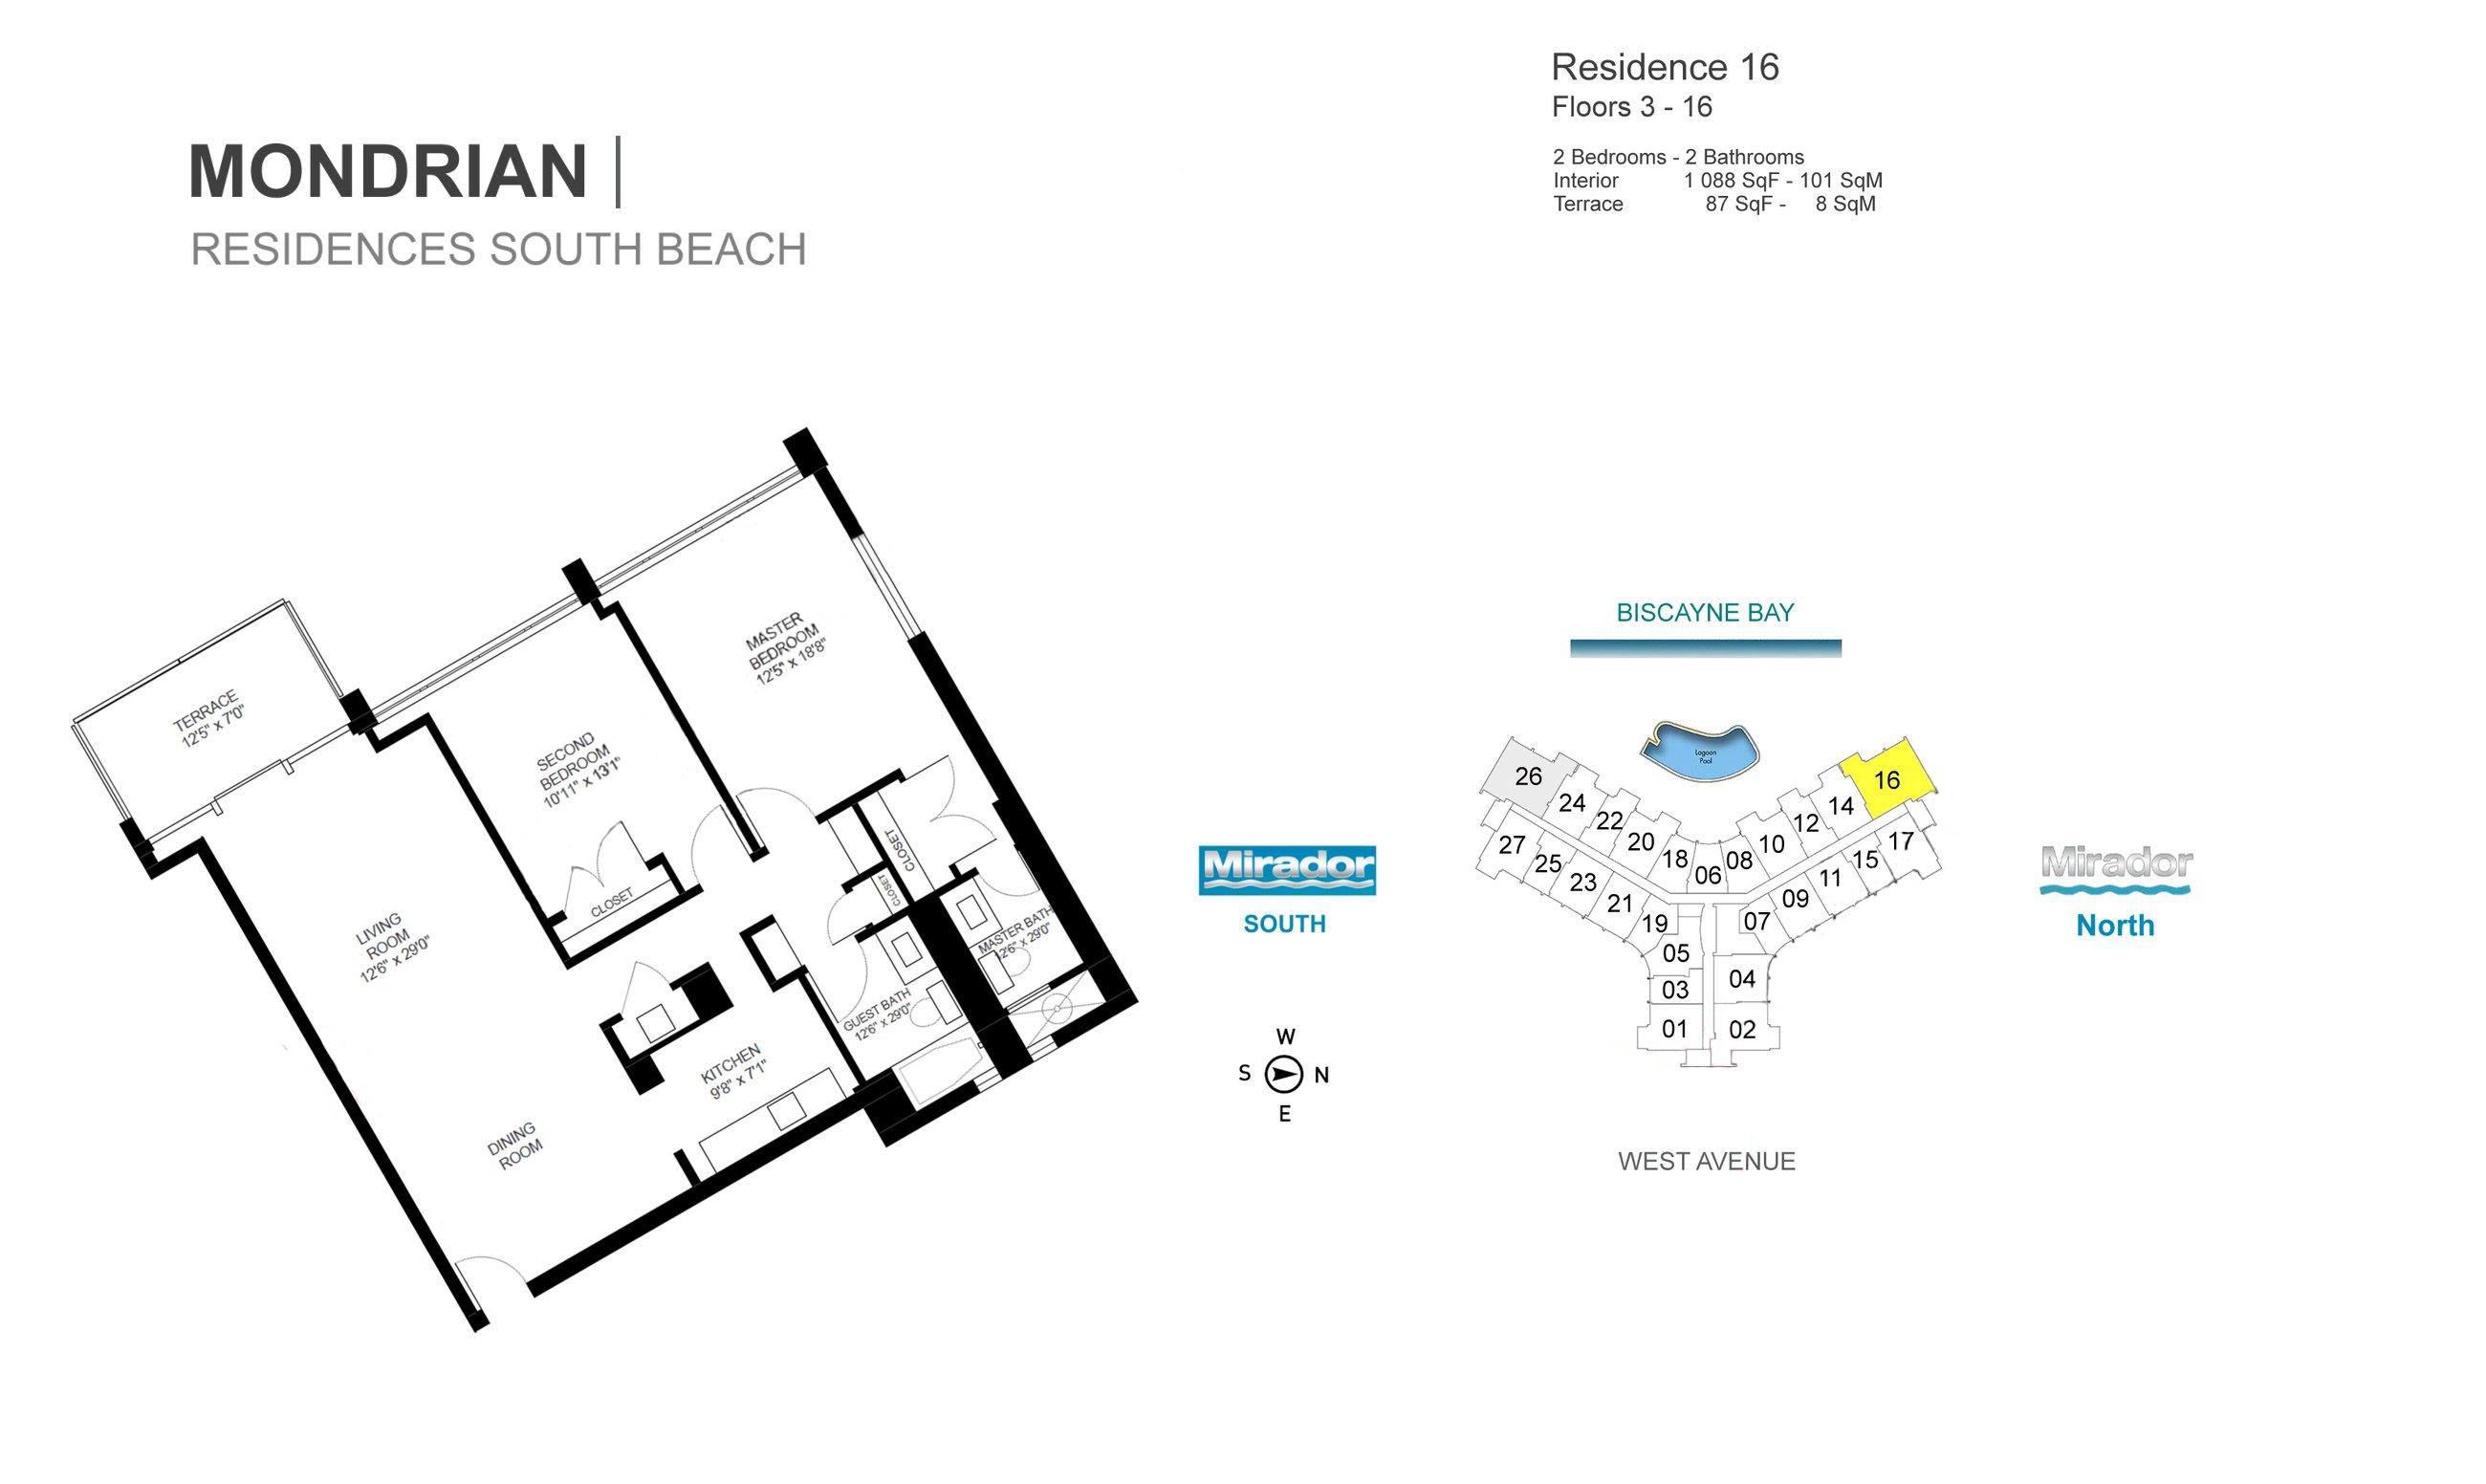 Mondrian South Beach Residence 16